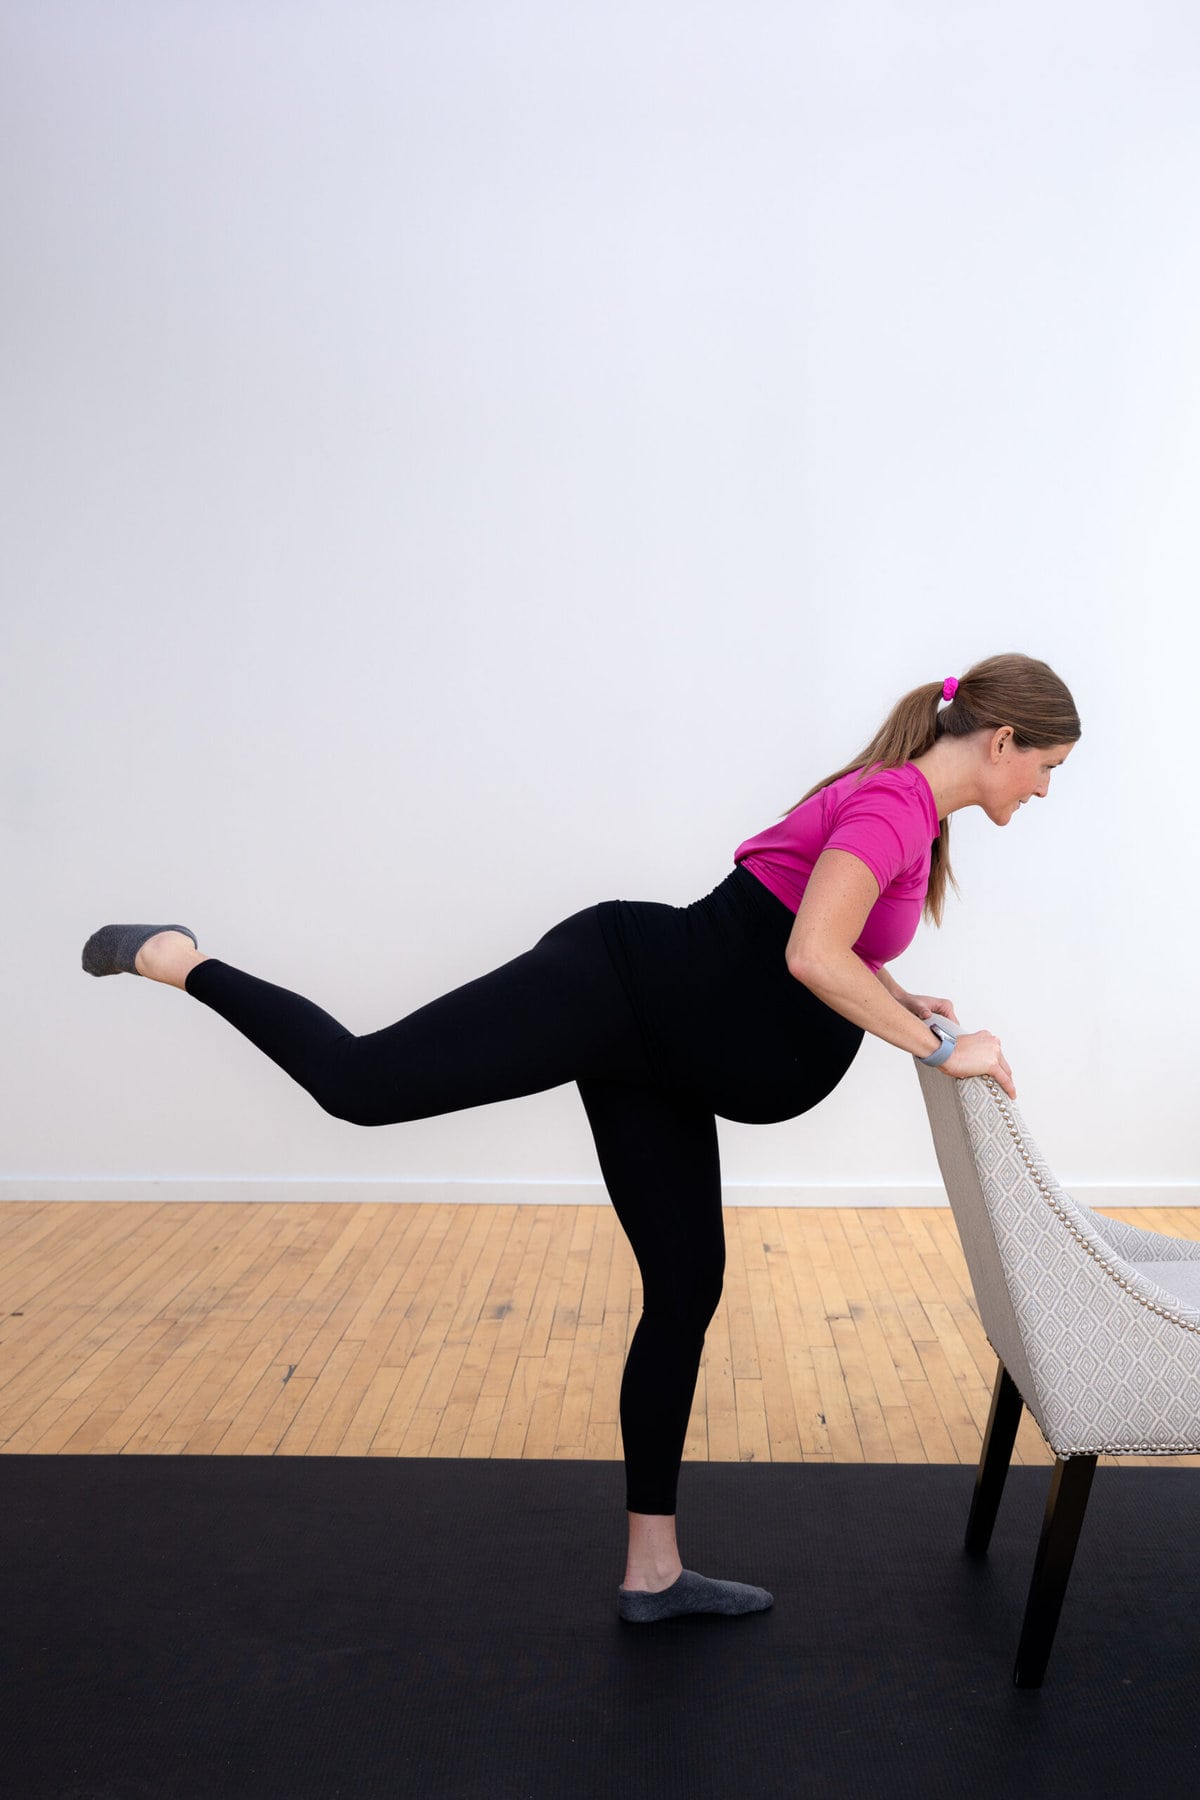 4 Basic Ballet Barre Exercises